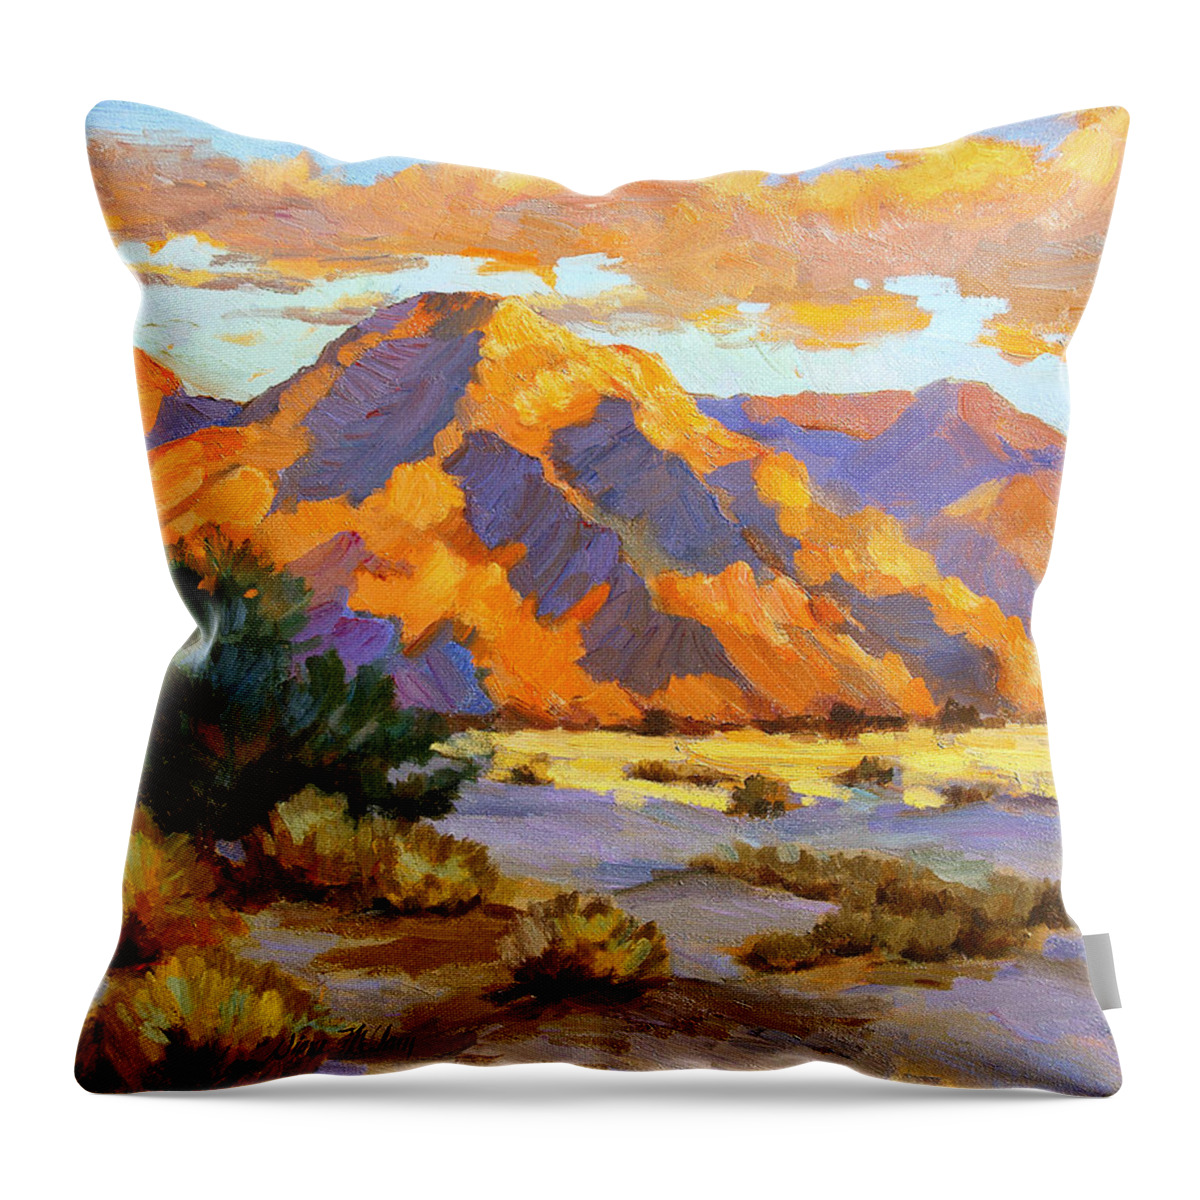 Desert Sunset Throw Pillow featuring the painting Desert Sunset by Diane McClary